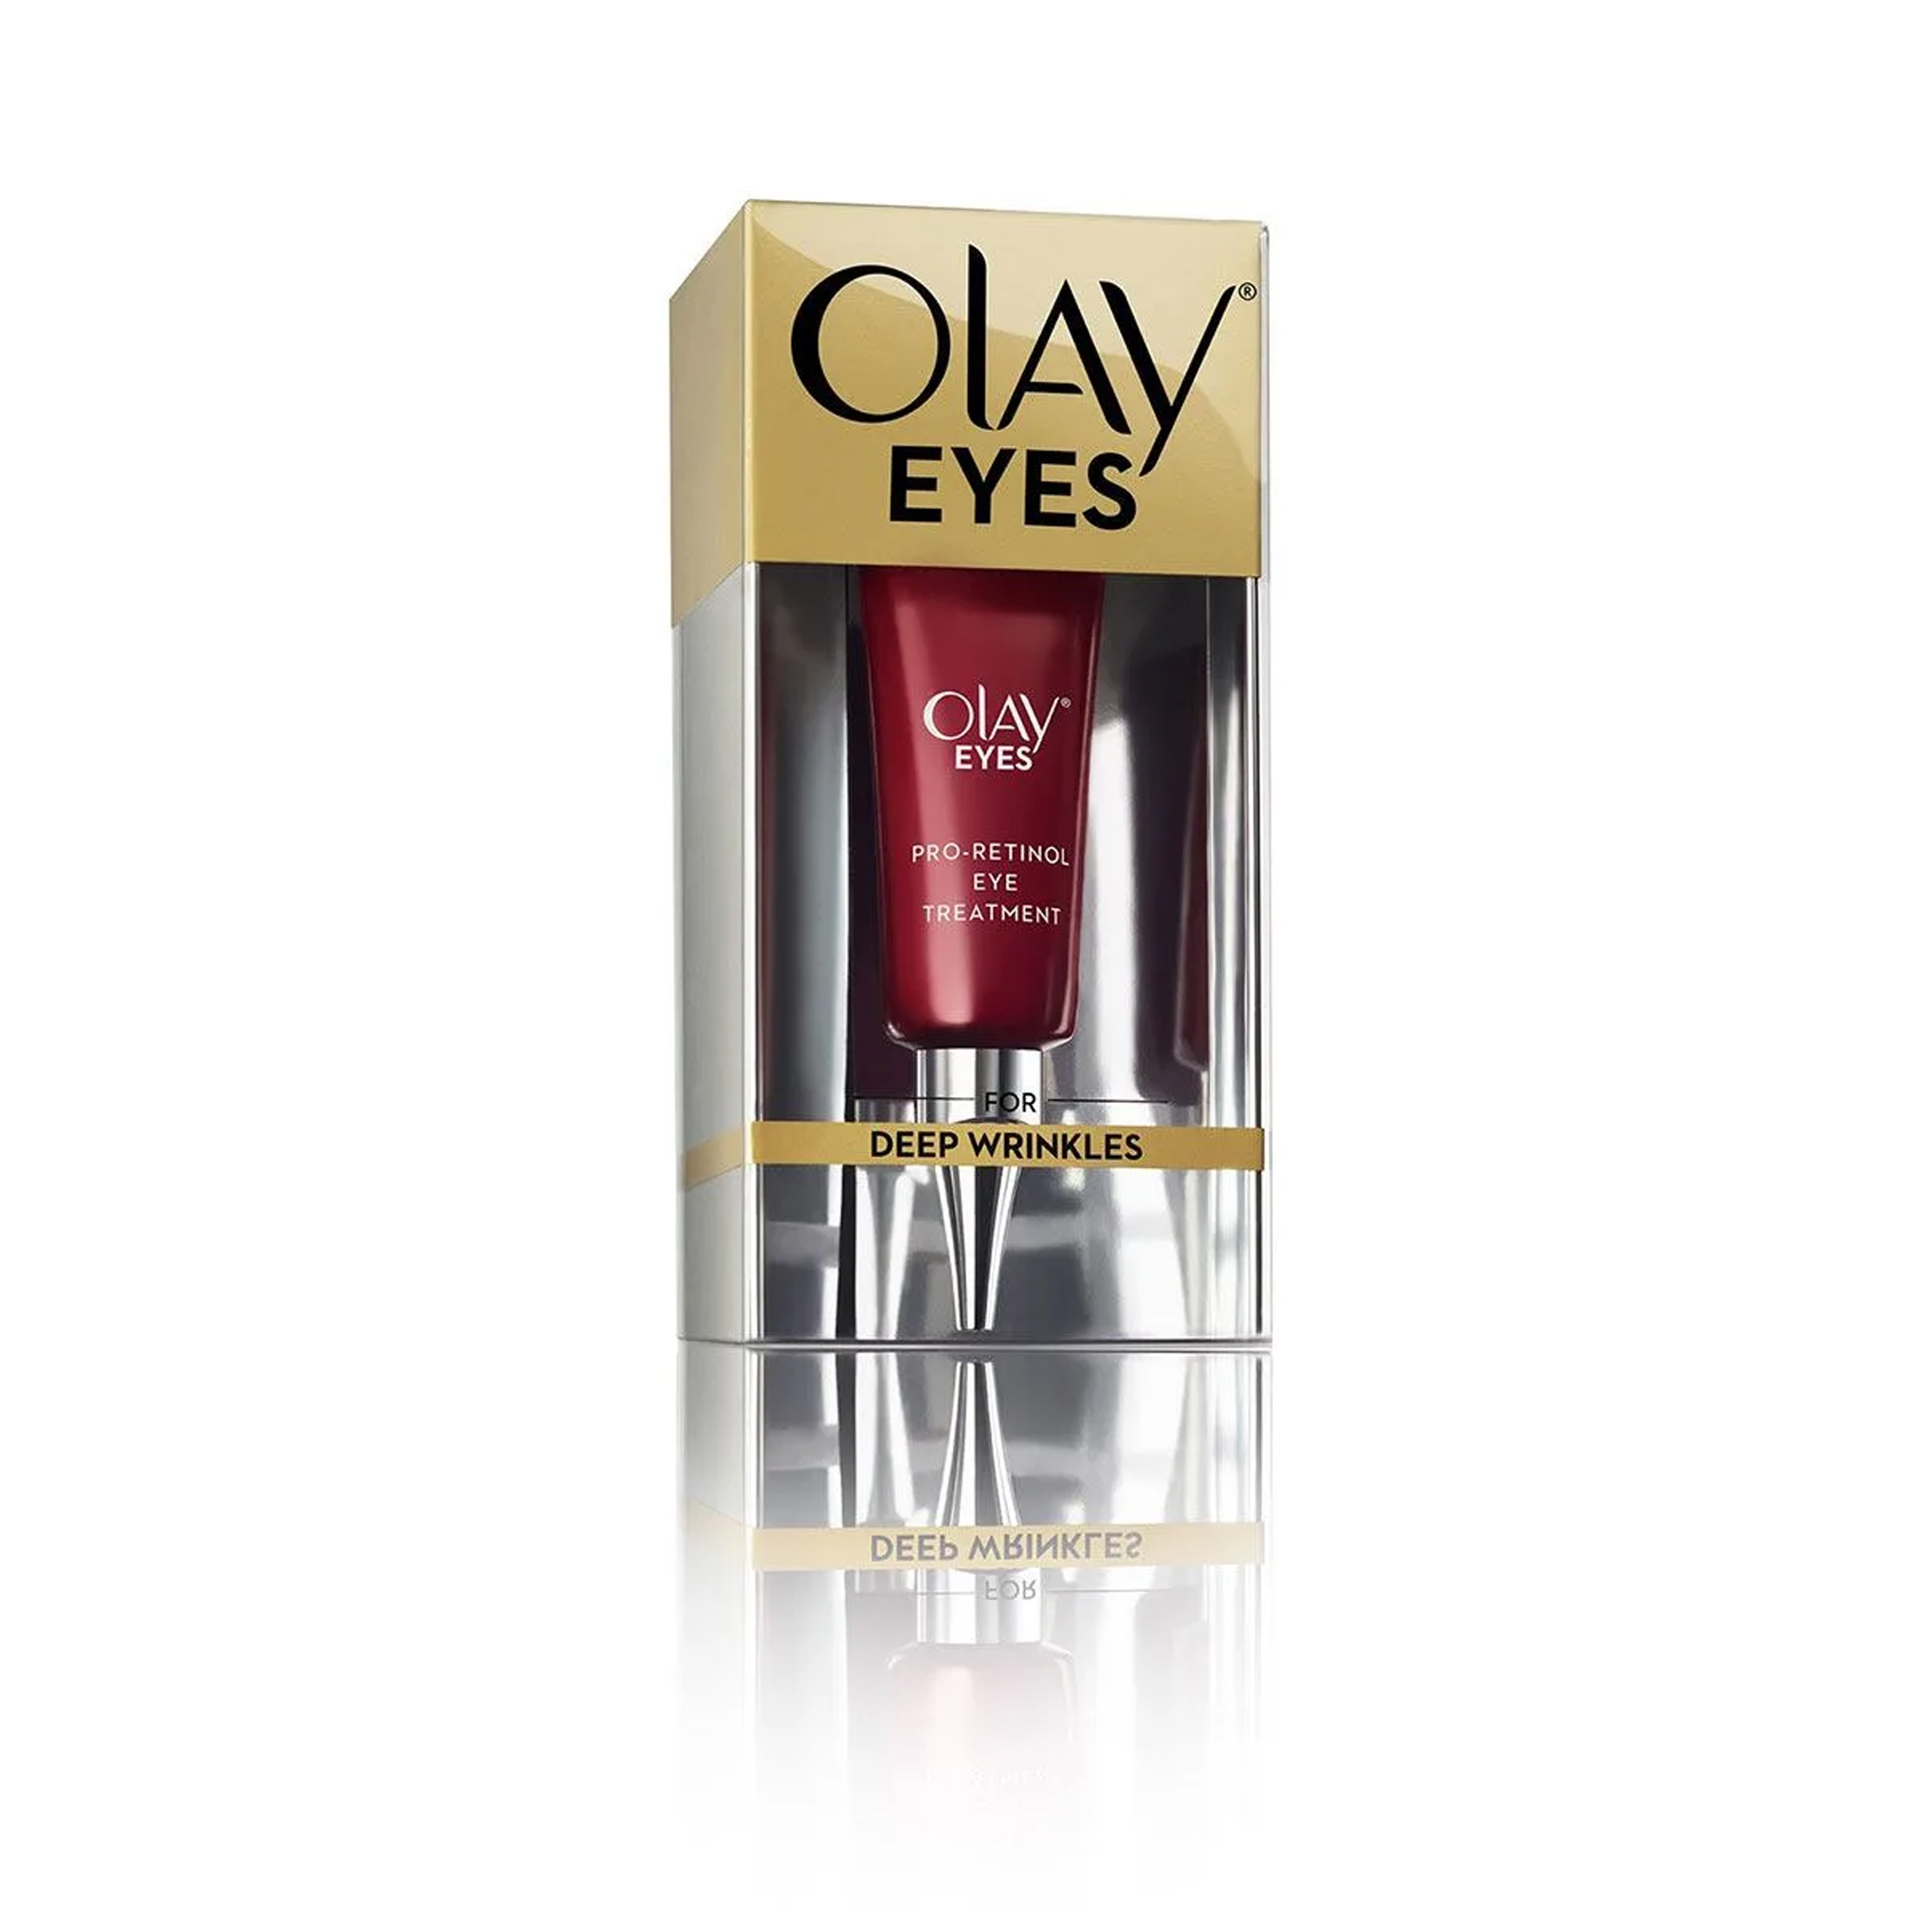 Olay Eyes Pro-Retinol Eye Treatment Cream Image 2